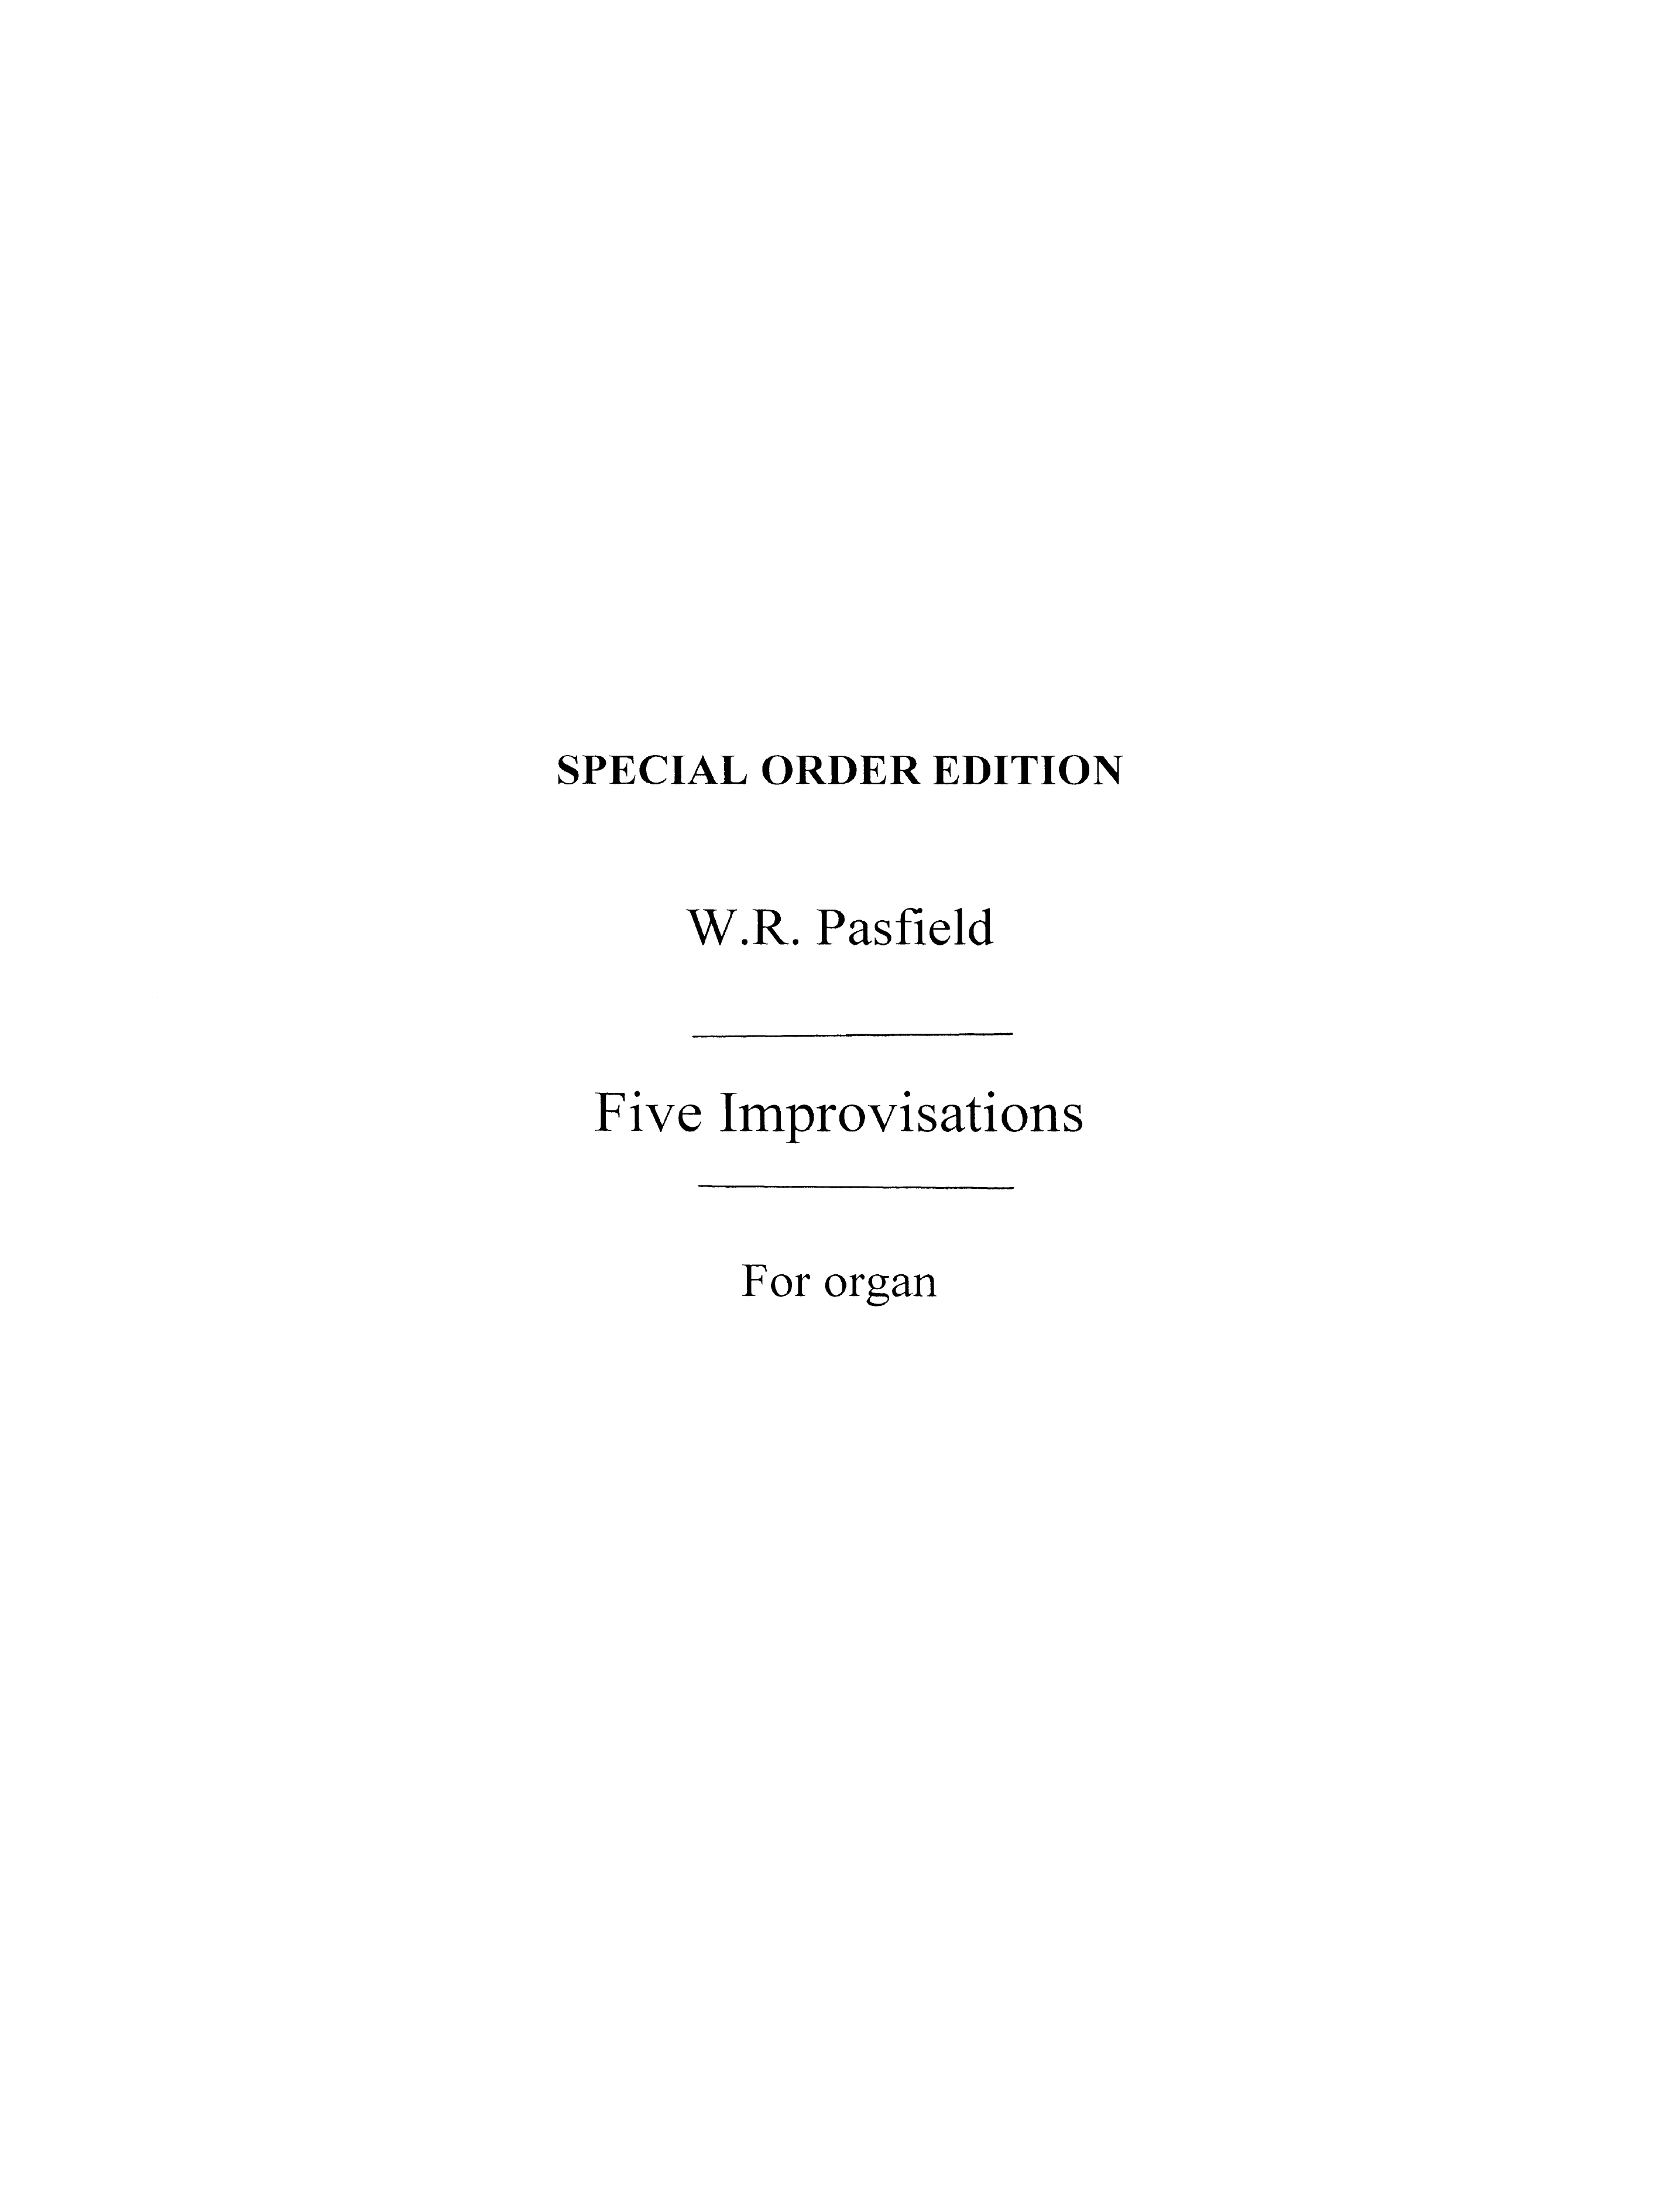 William Pasfield: William Pasfield: Five Improvisations For Organ: Organ: